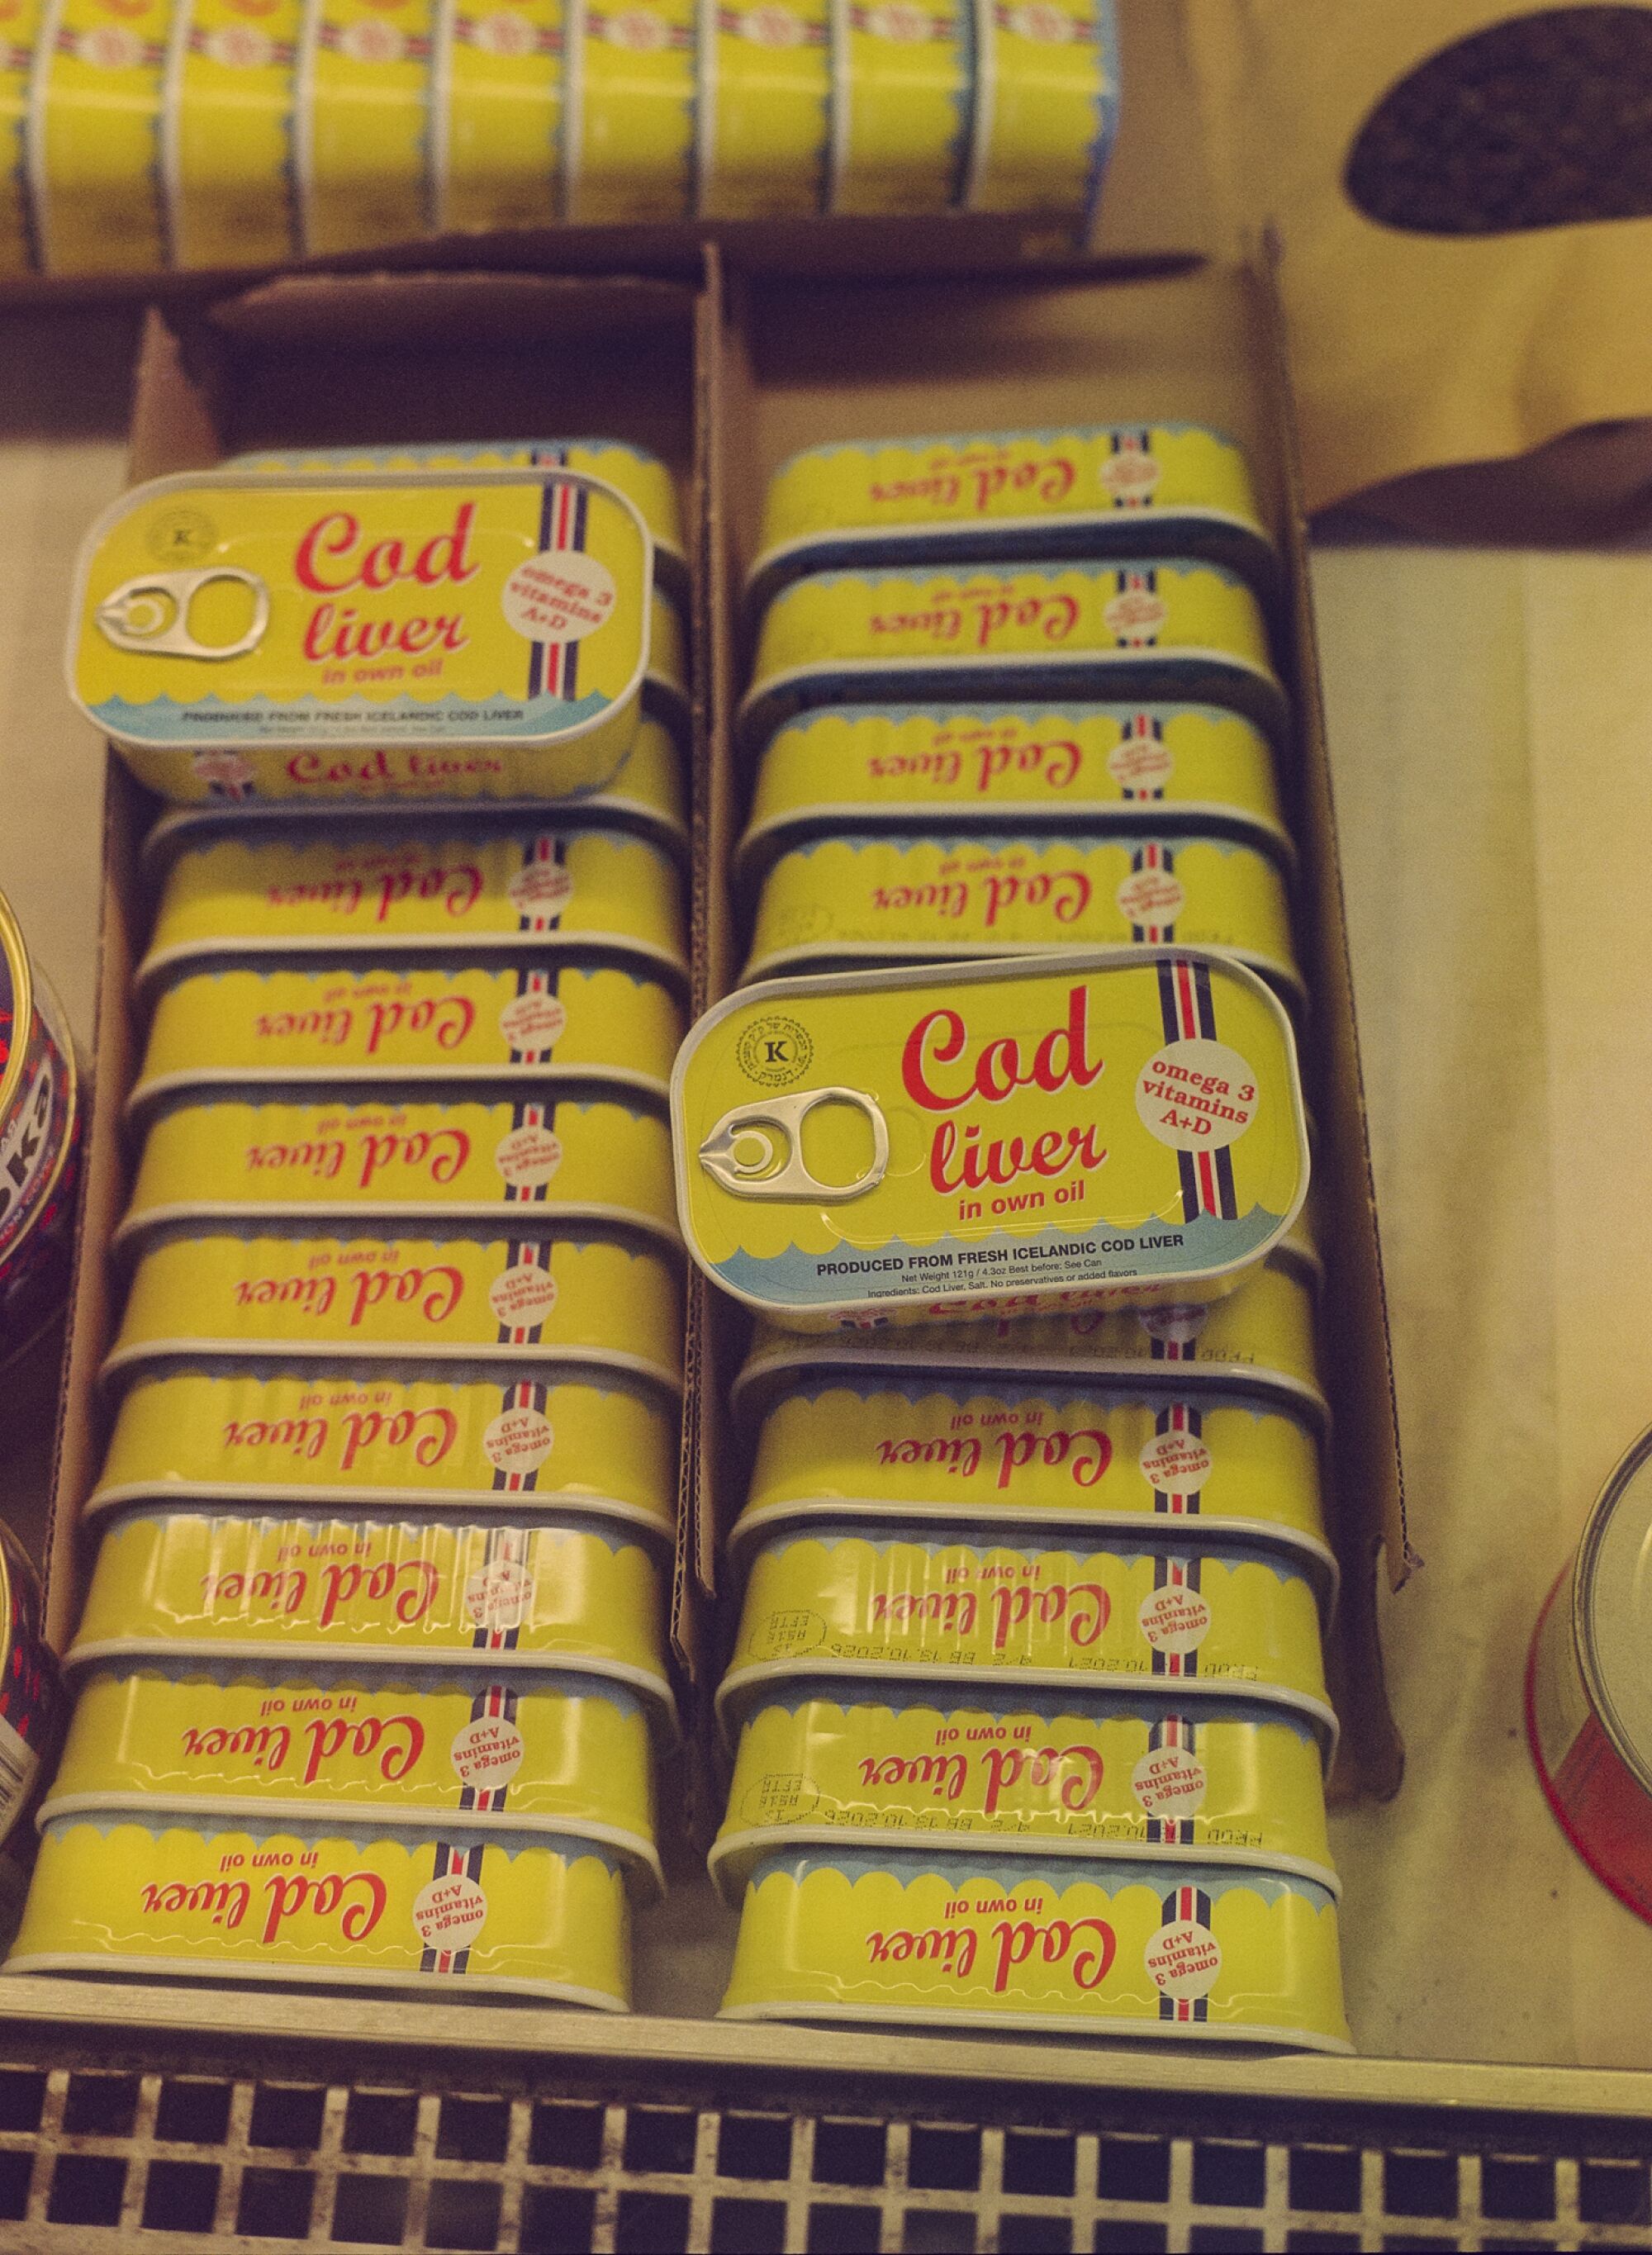 Yellow cod liver tins at Cherry Garden